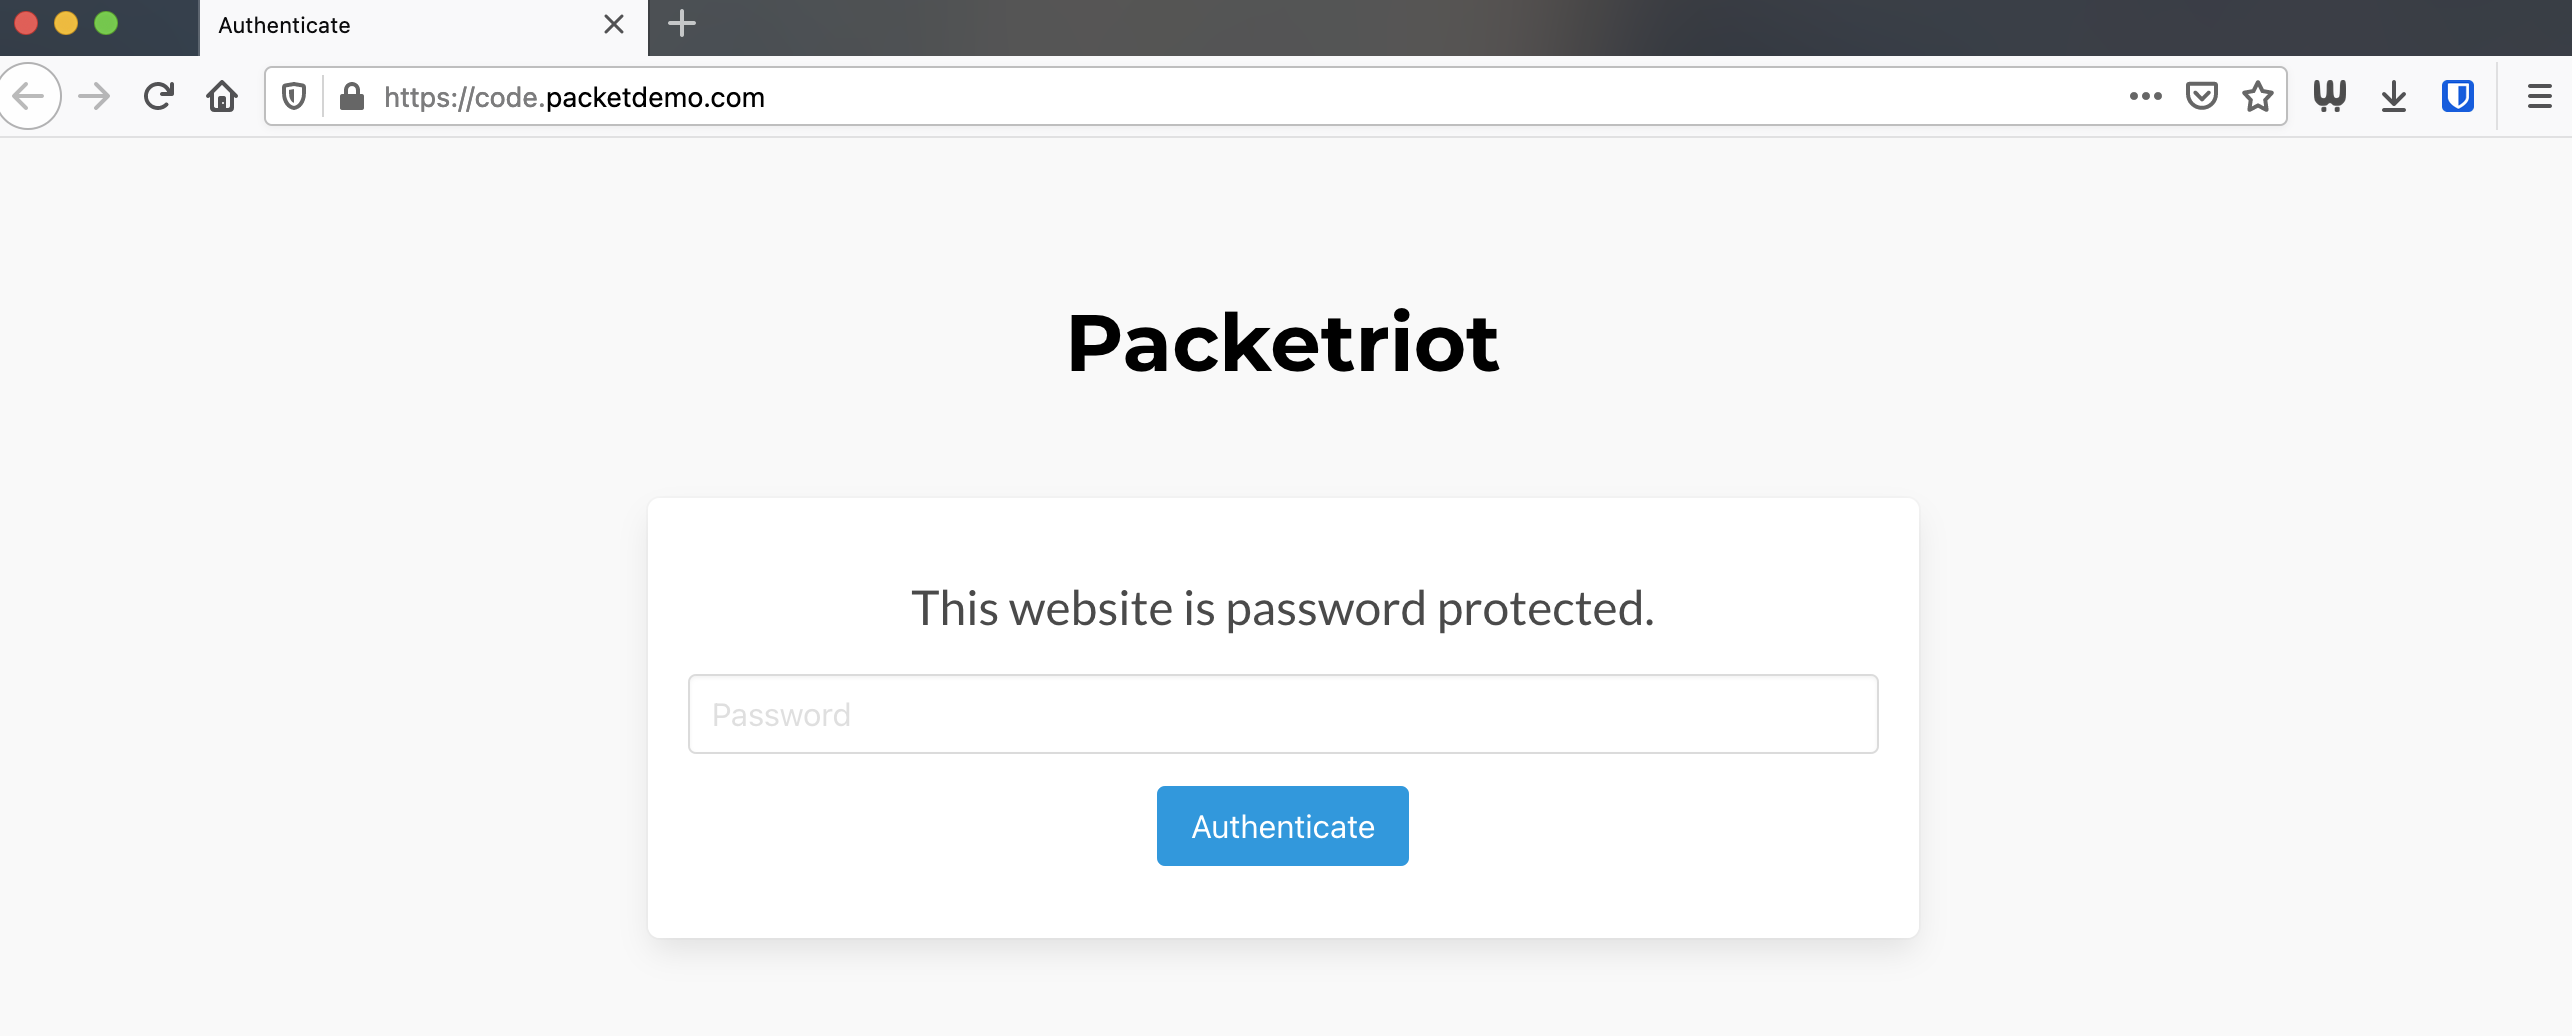 Packetriot Authentication Portal